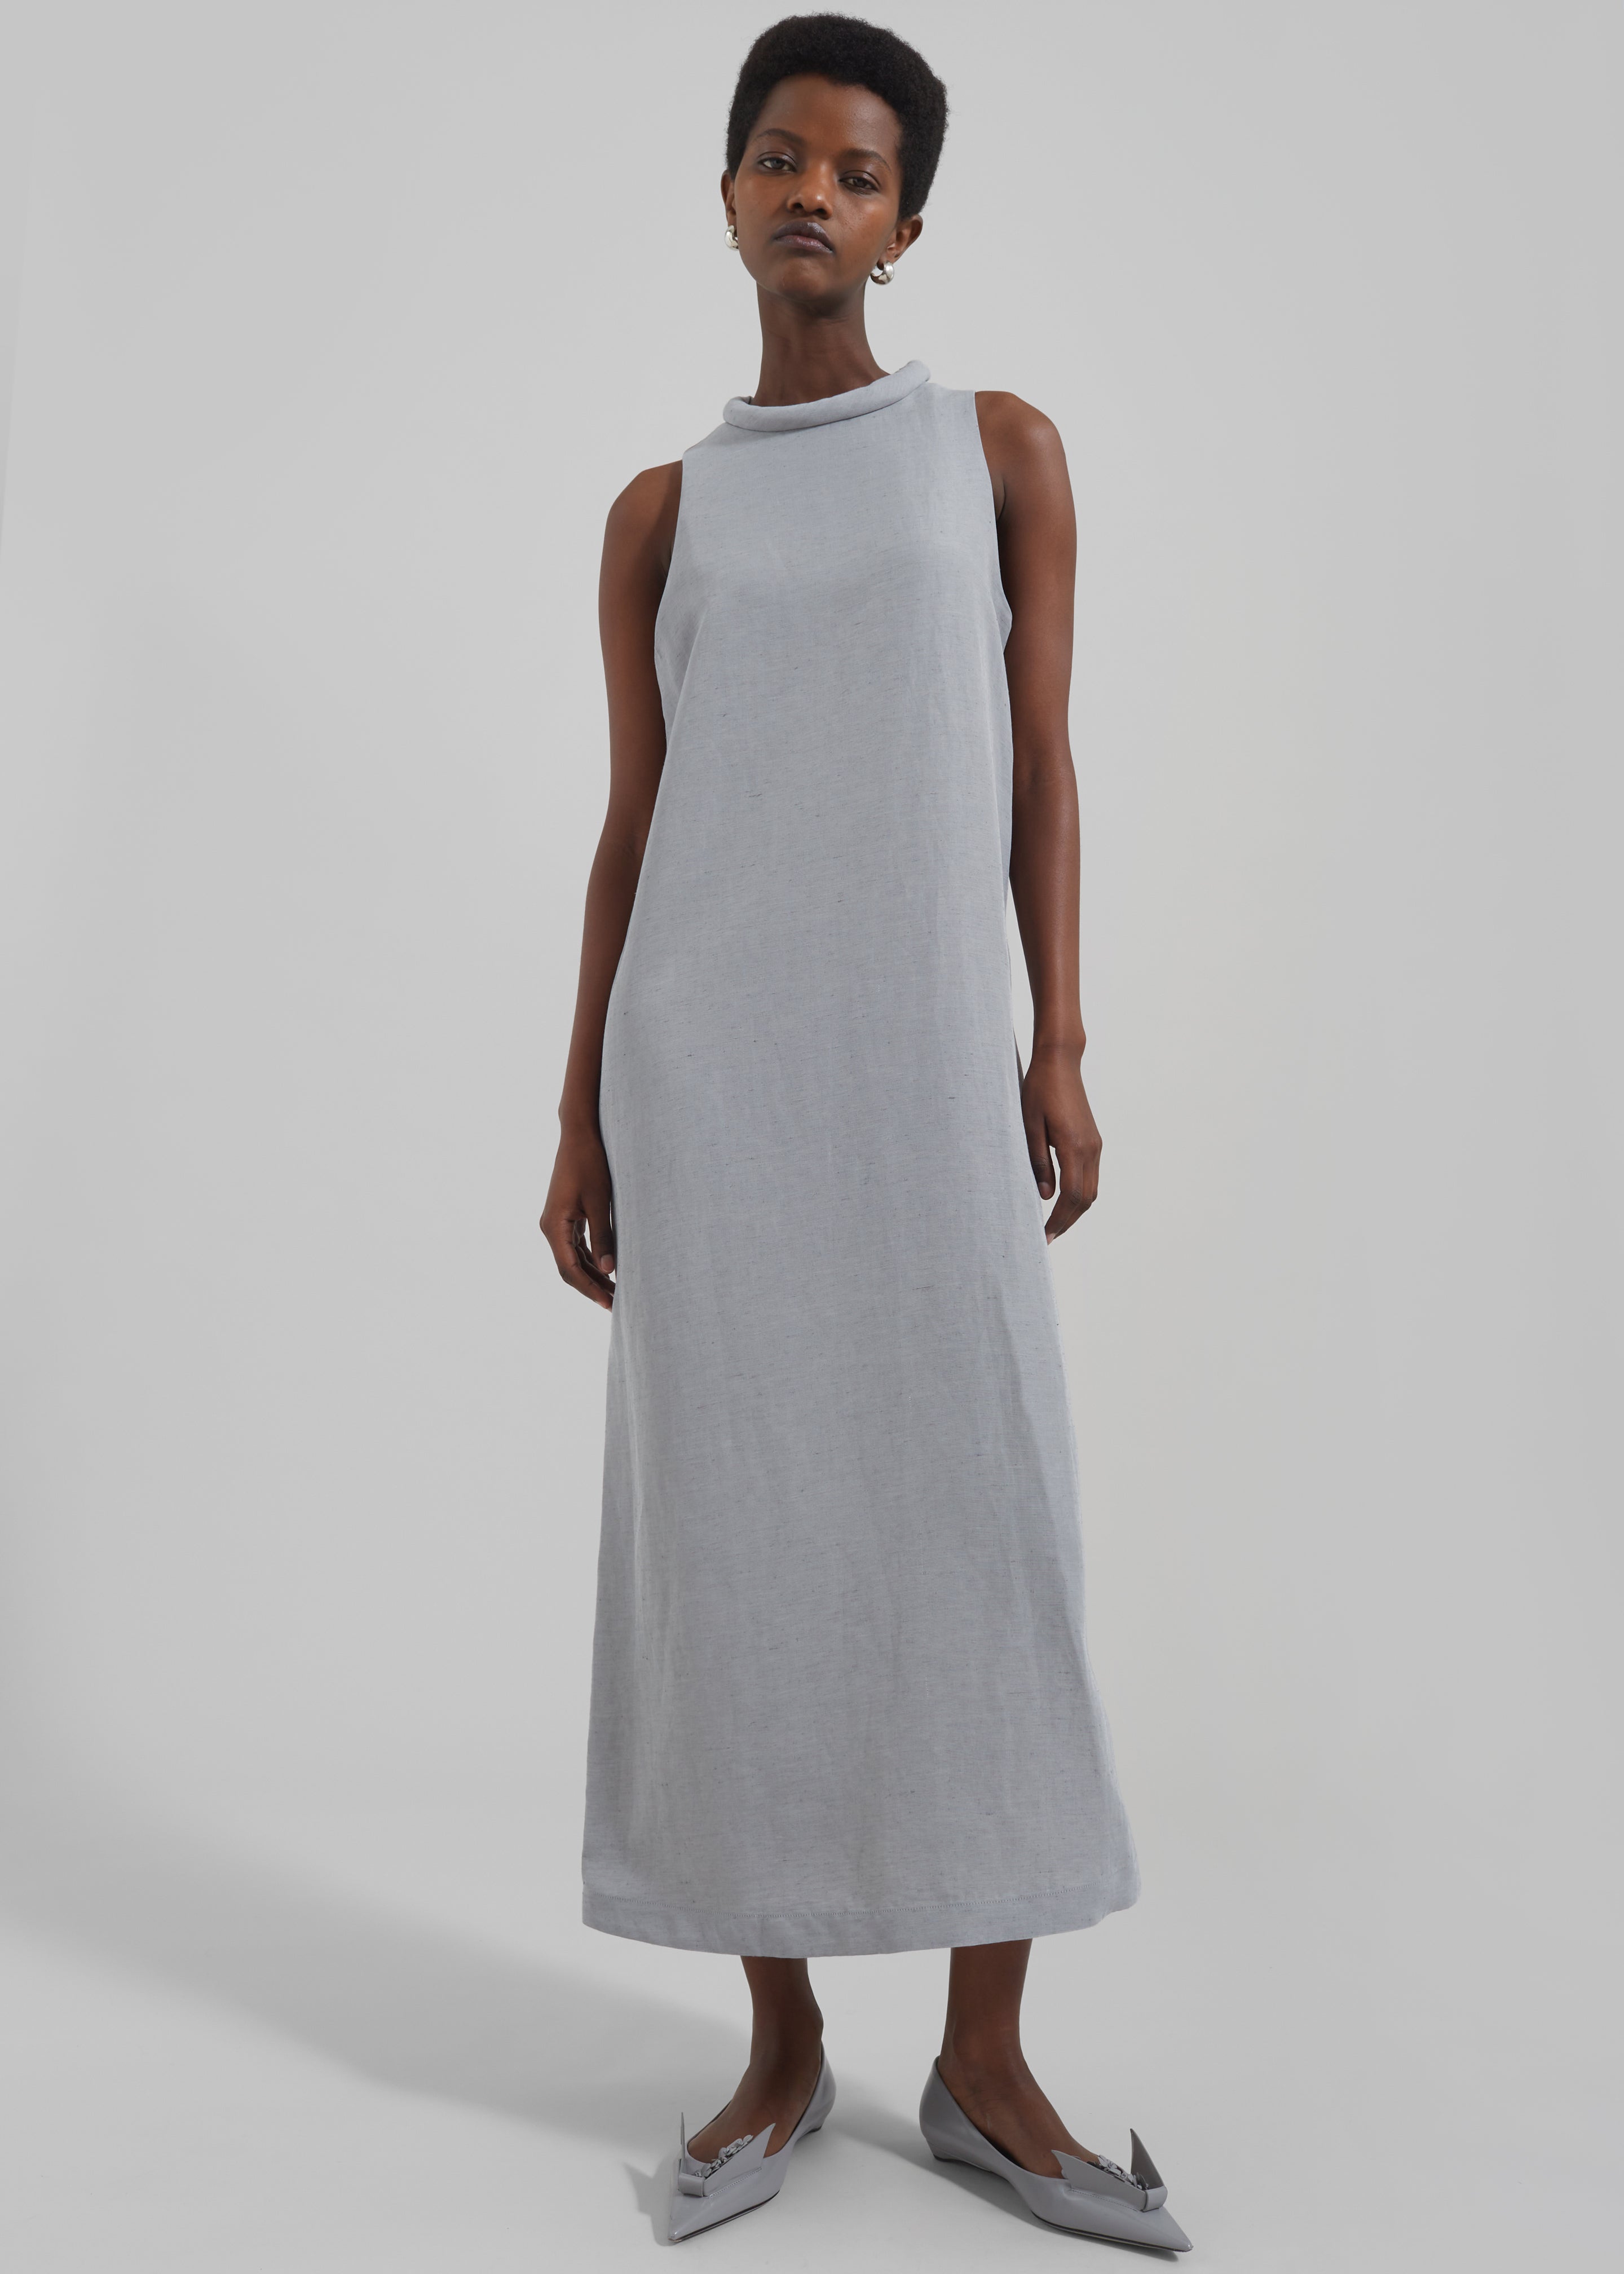 Loulou Studio Rivida Mixed Linen Dress - Pearl Grey Melange - 4